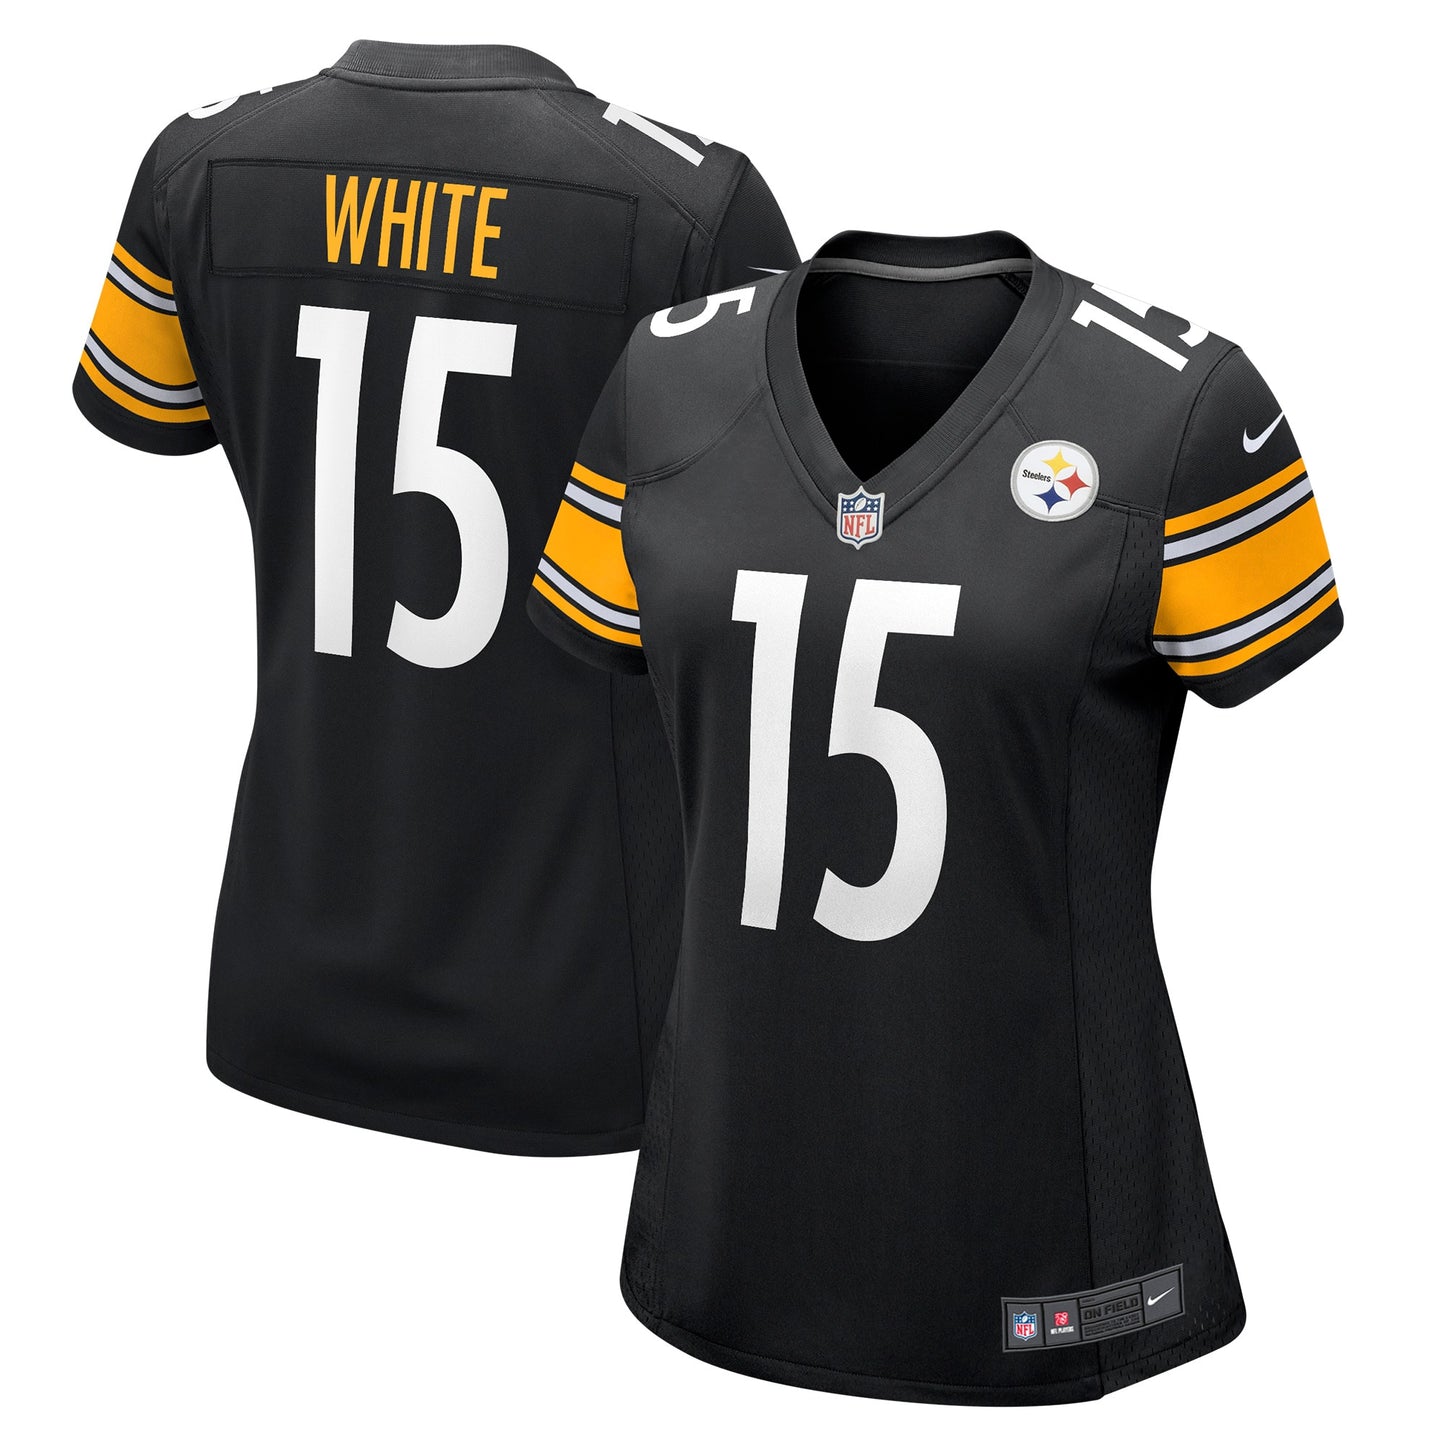 Cody White Pittsburgh Steelers Nike Women's Game Jersey - Black